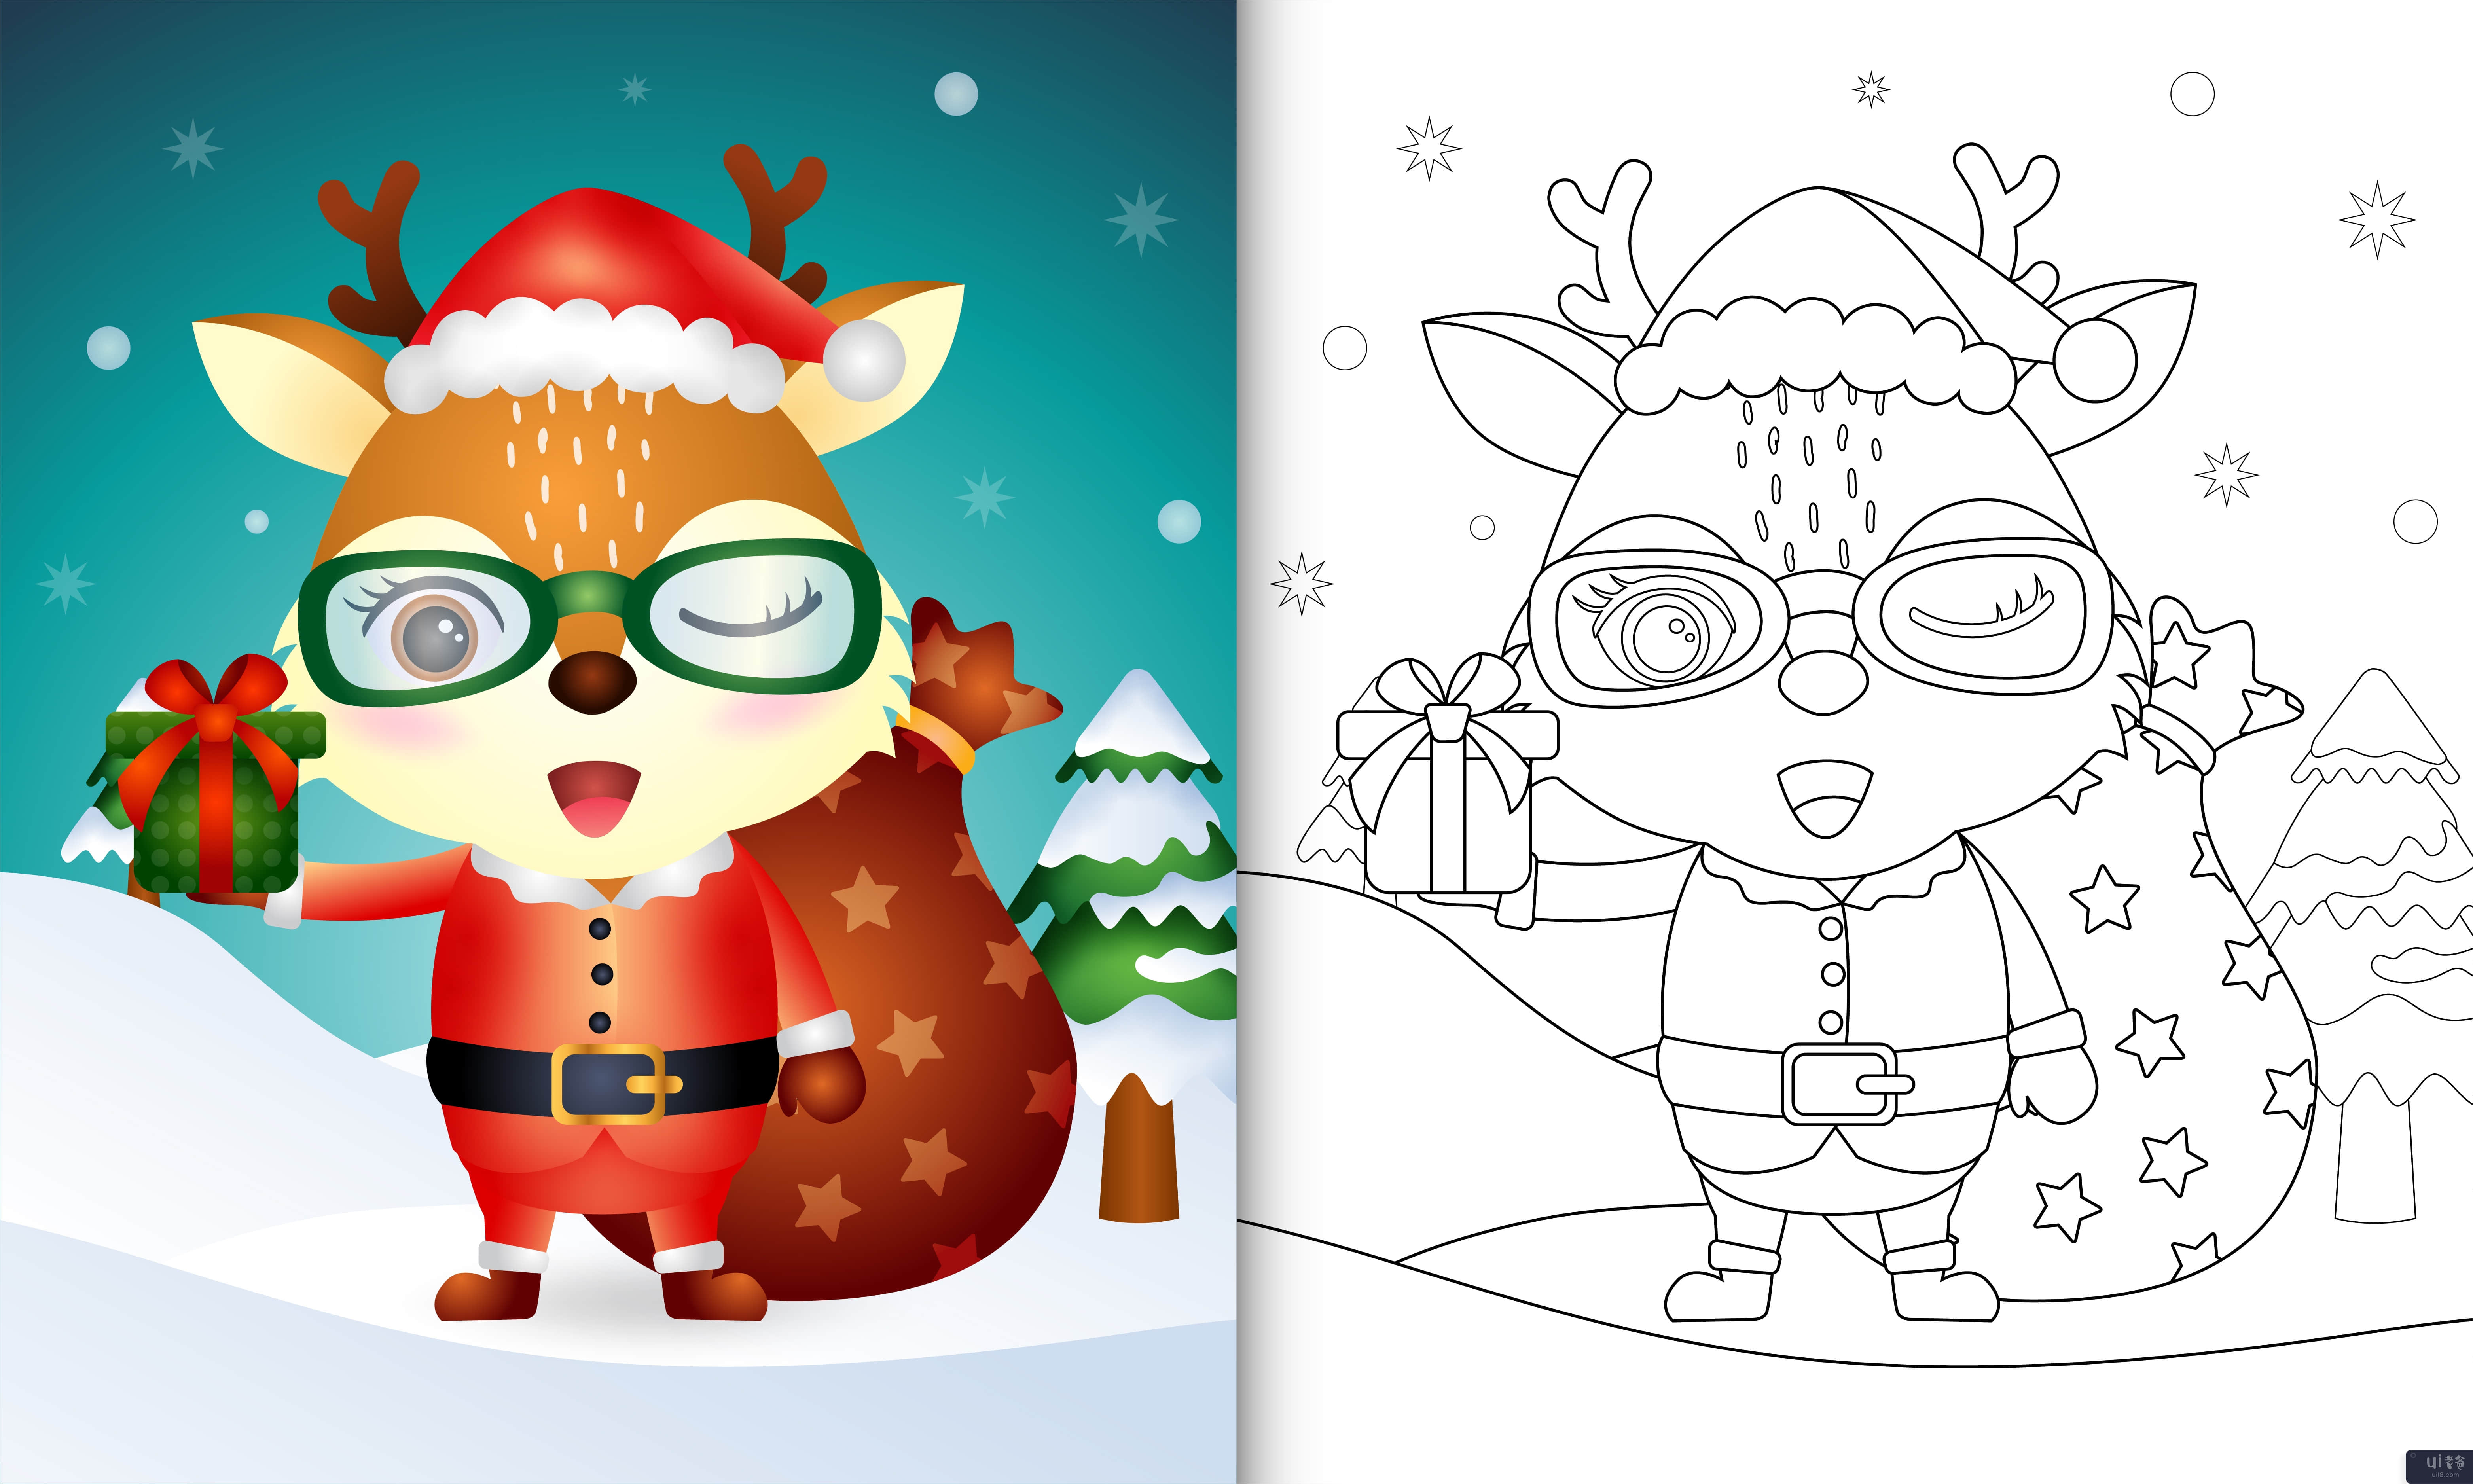 使用圣诞老人服装的可爱鹿着色书(coloring book with a cute deer using santa clause costume)插图2